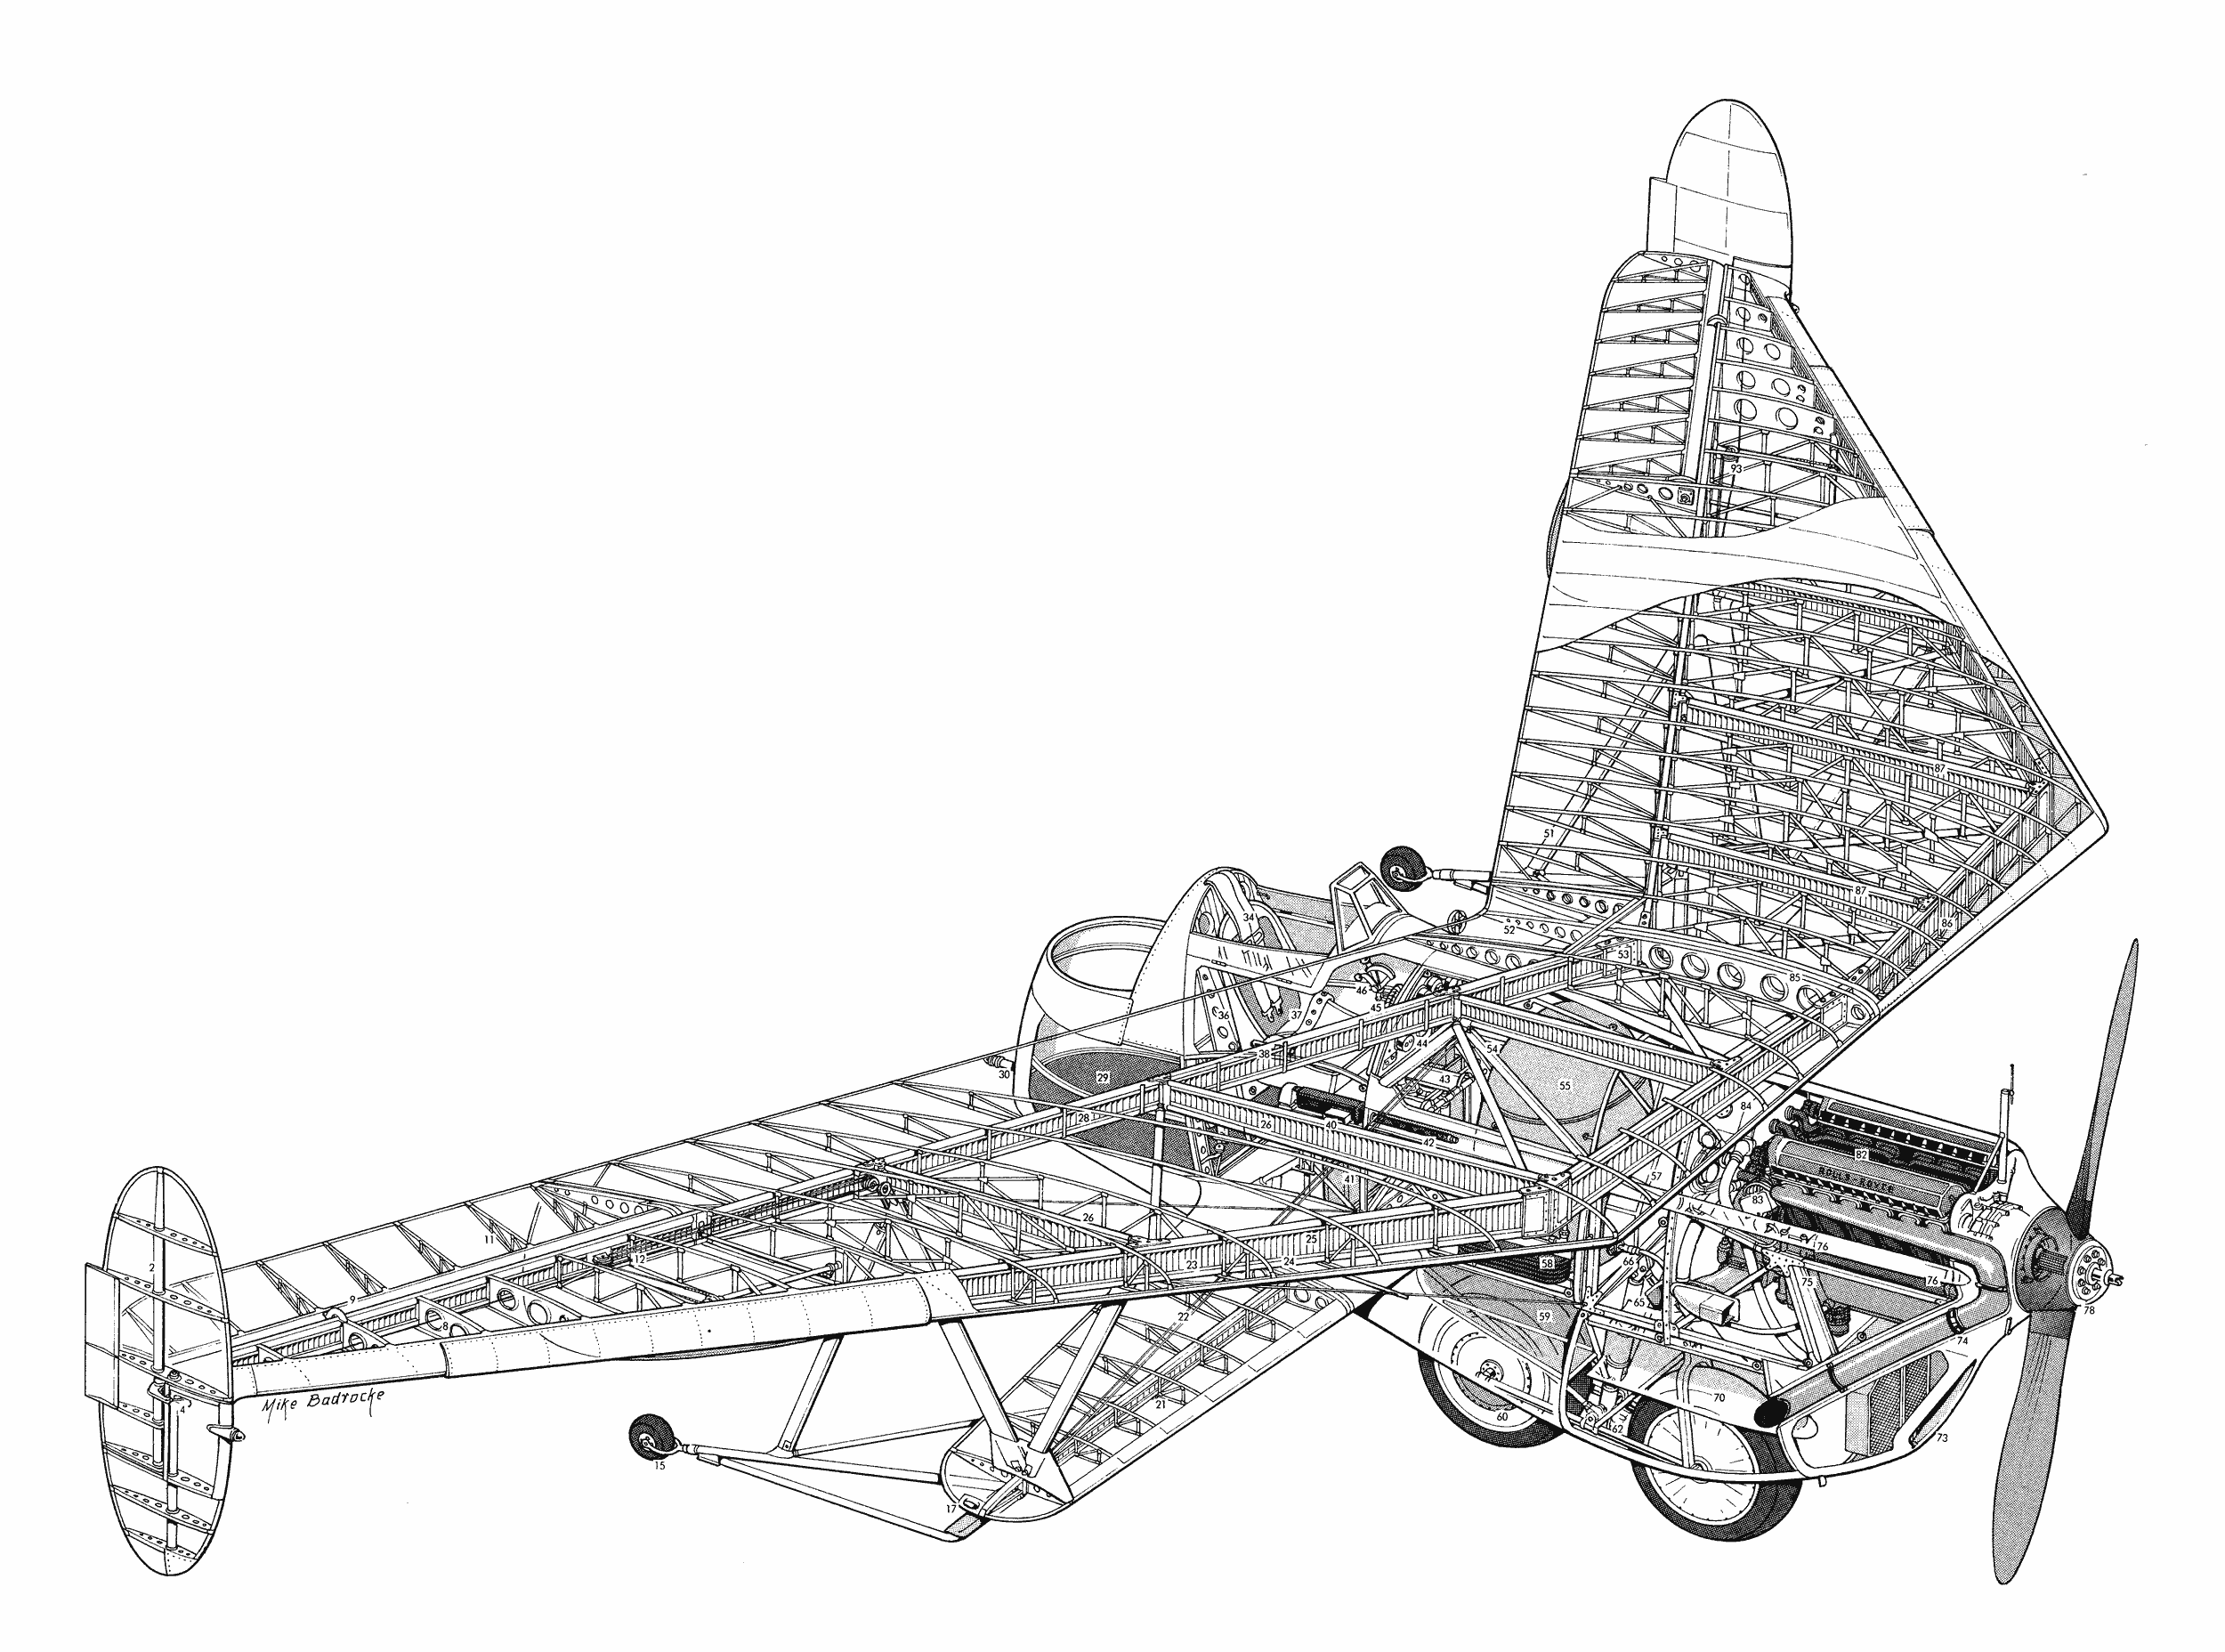 Westland-Hill Pterodactyl cutaway